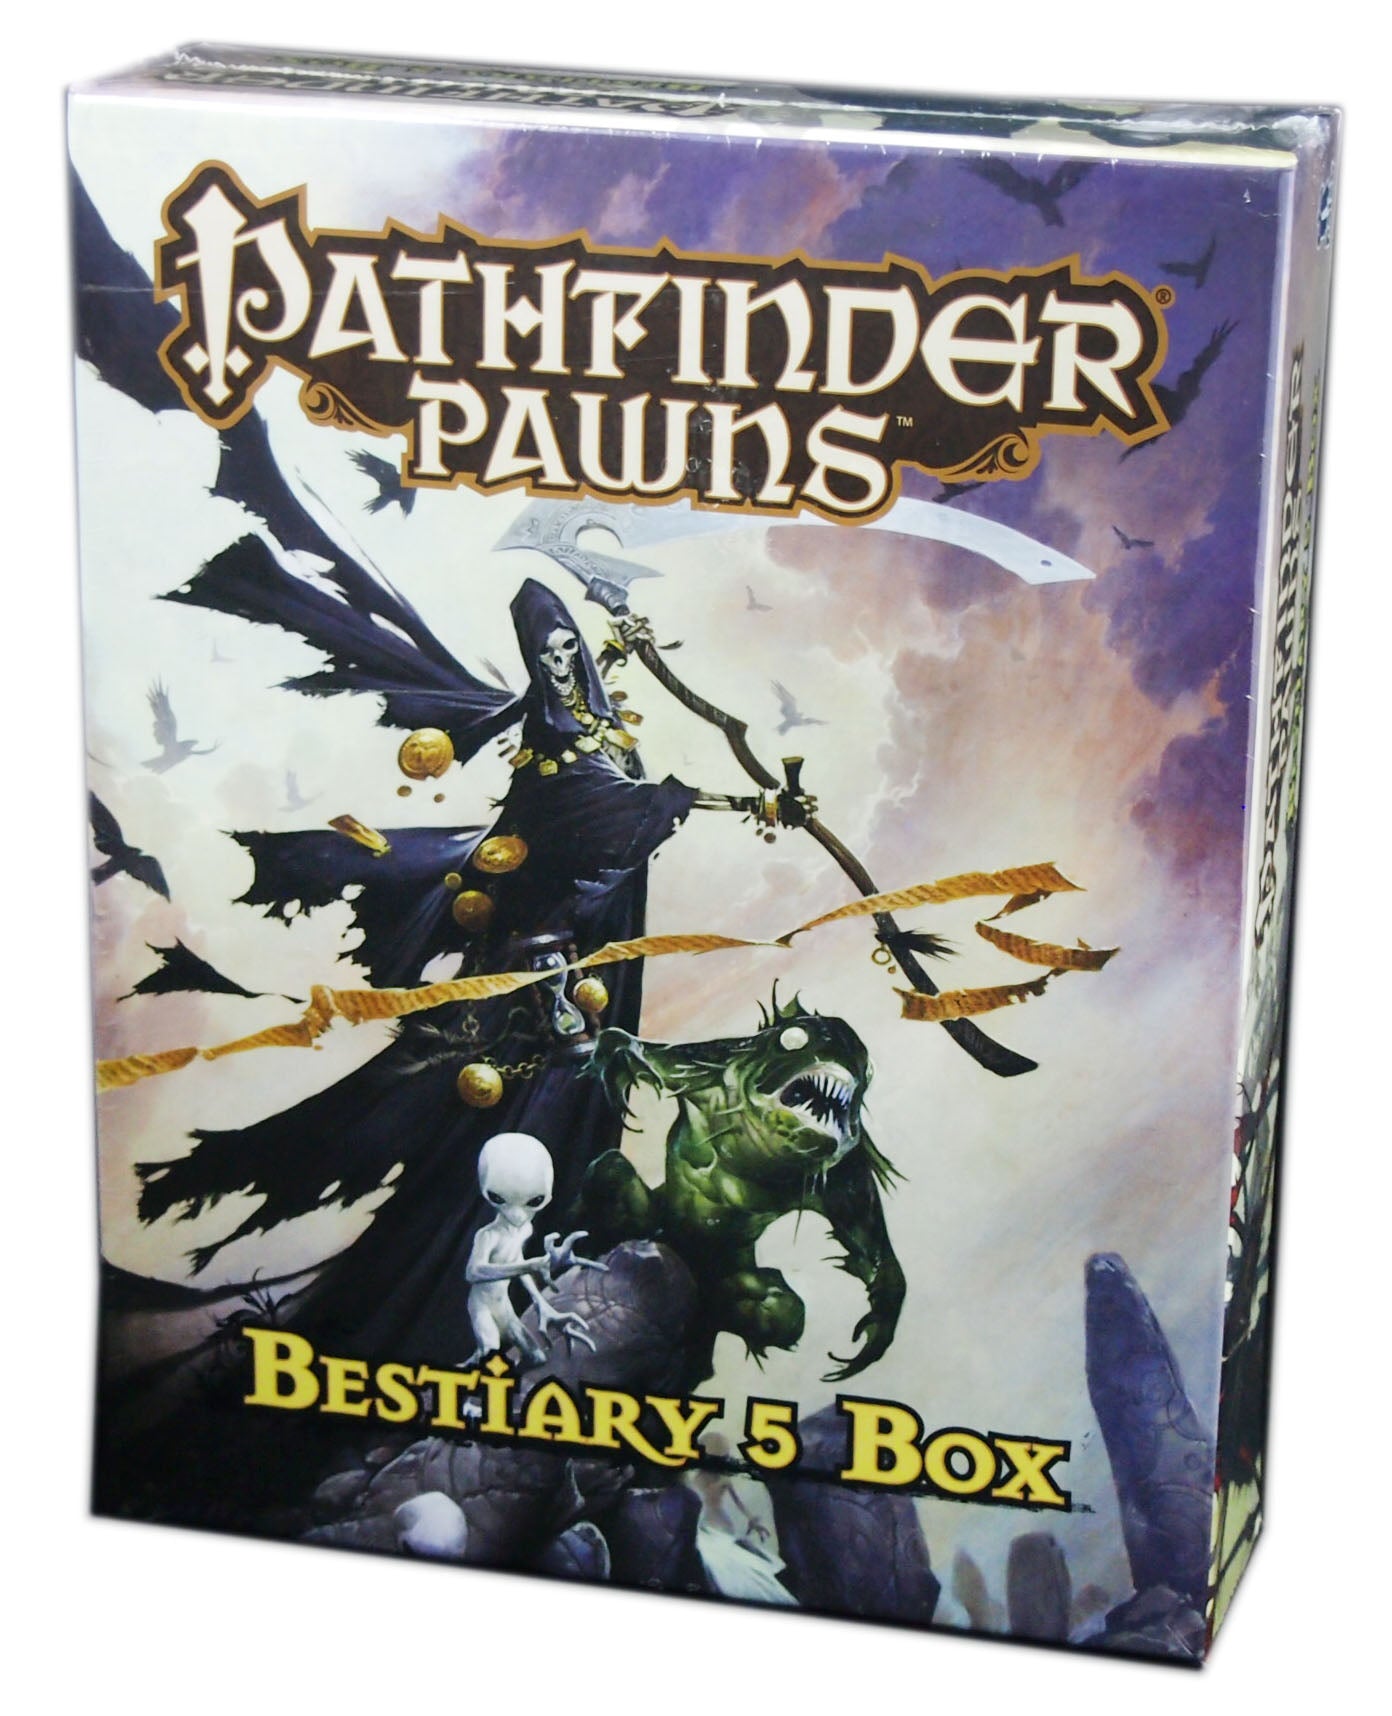 Pathfinder Pawns, Bestiary 5 Box